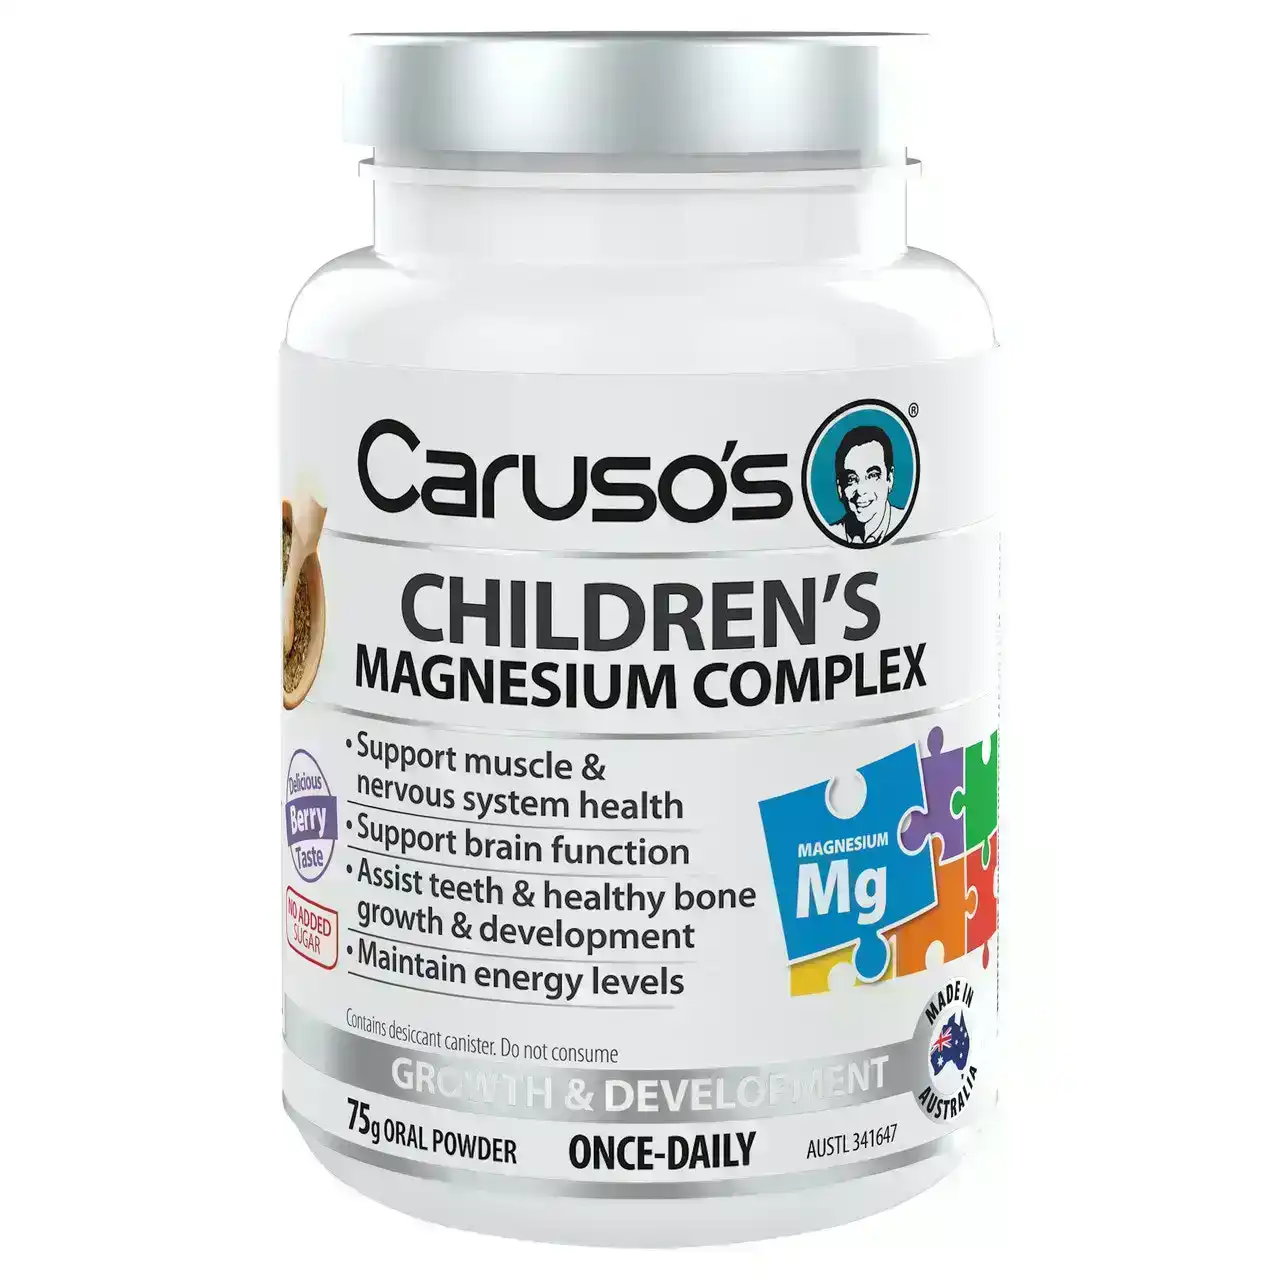 Caruso's Children's Magnesium Complex 75g